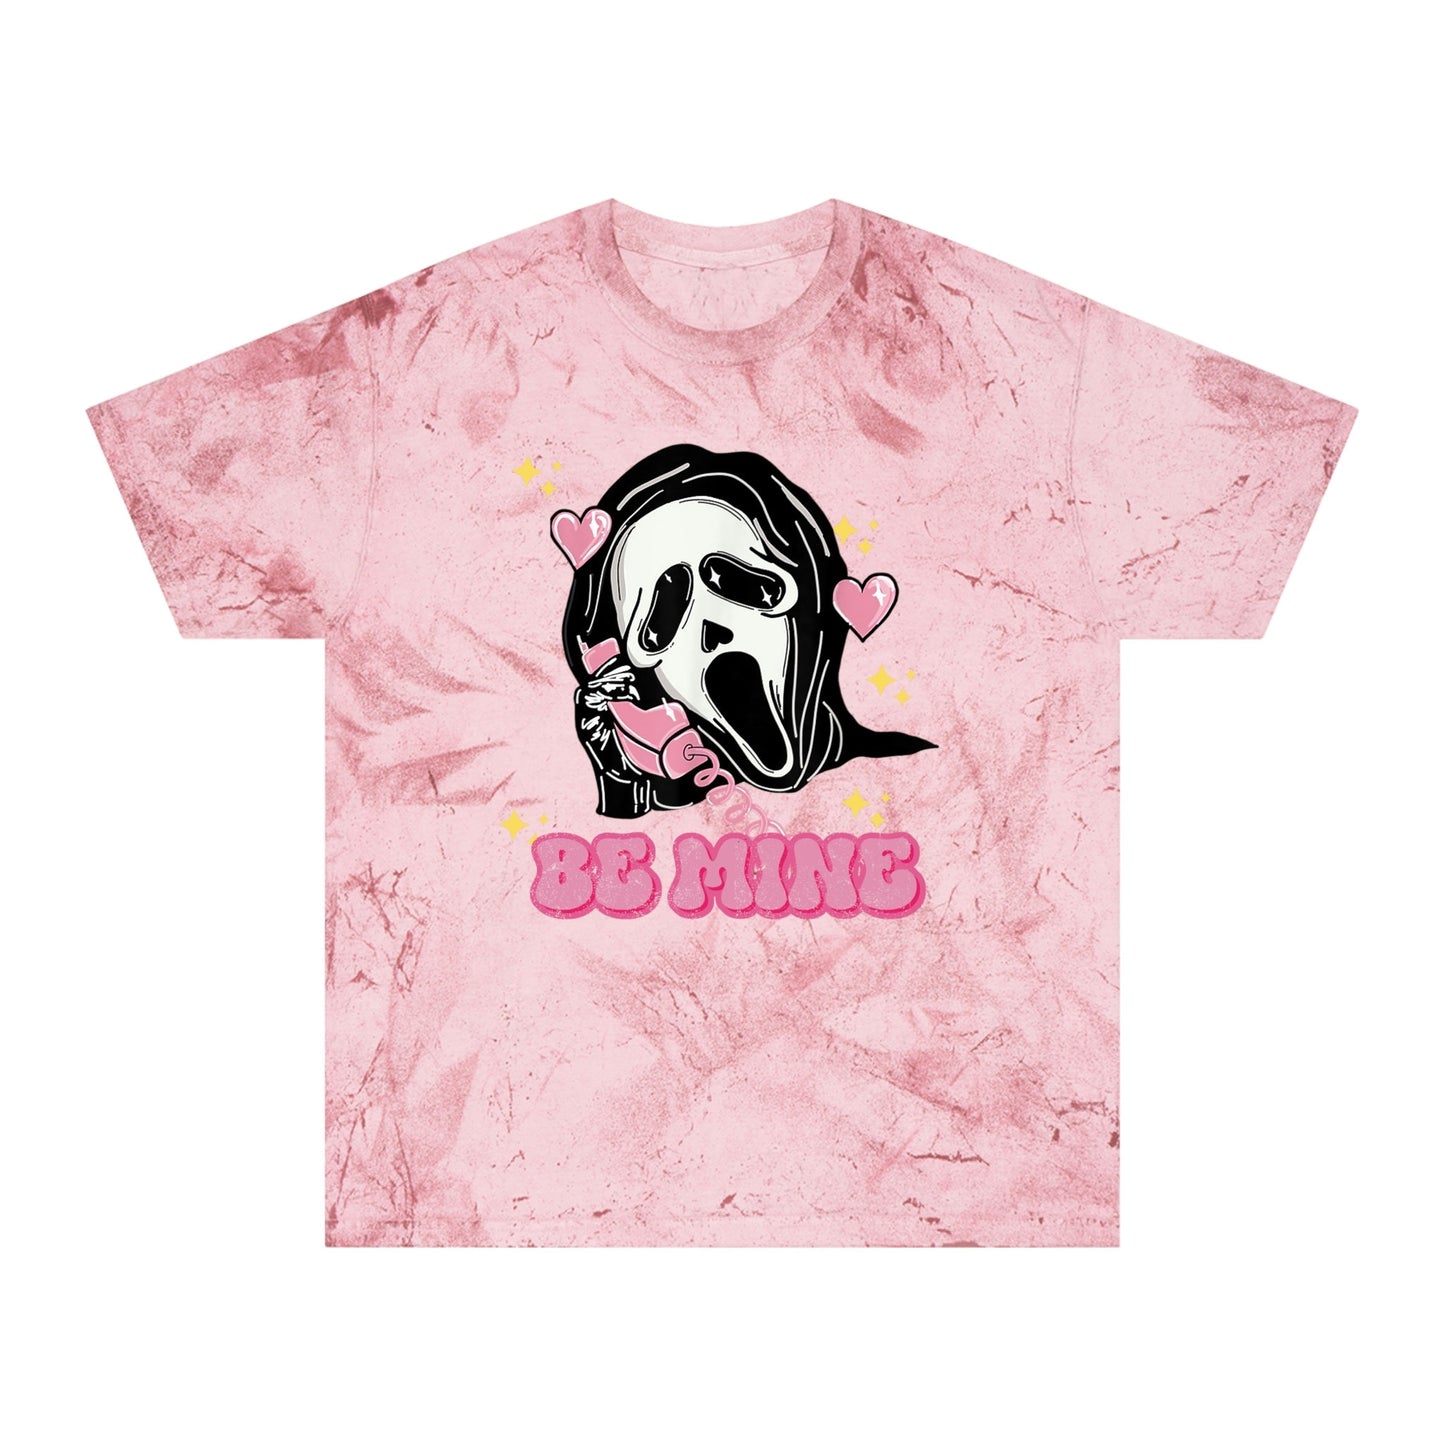 Ghostface shirt, Scream shirt, Funny ghostface shirt, Funny Valentine's shirt, Horror merch, Ghostface Valentine's Day shirt